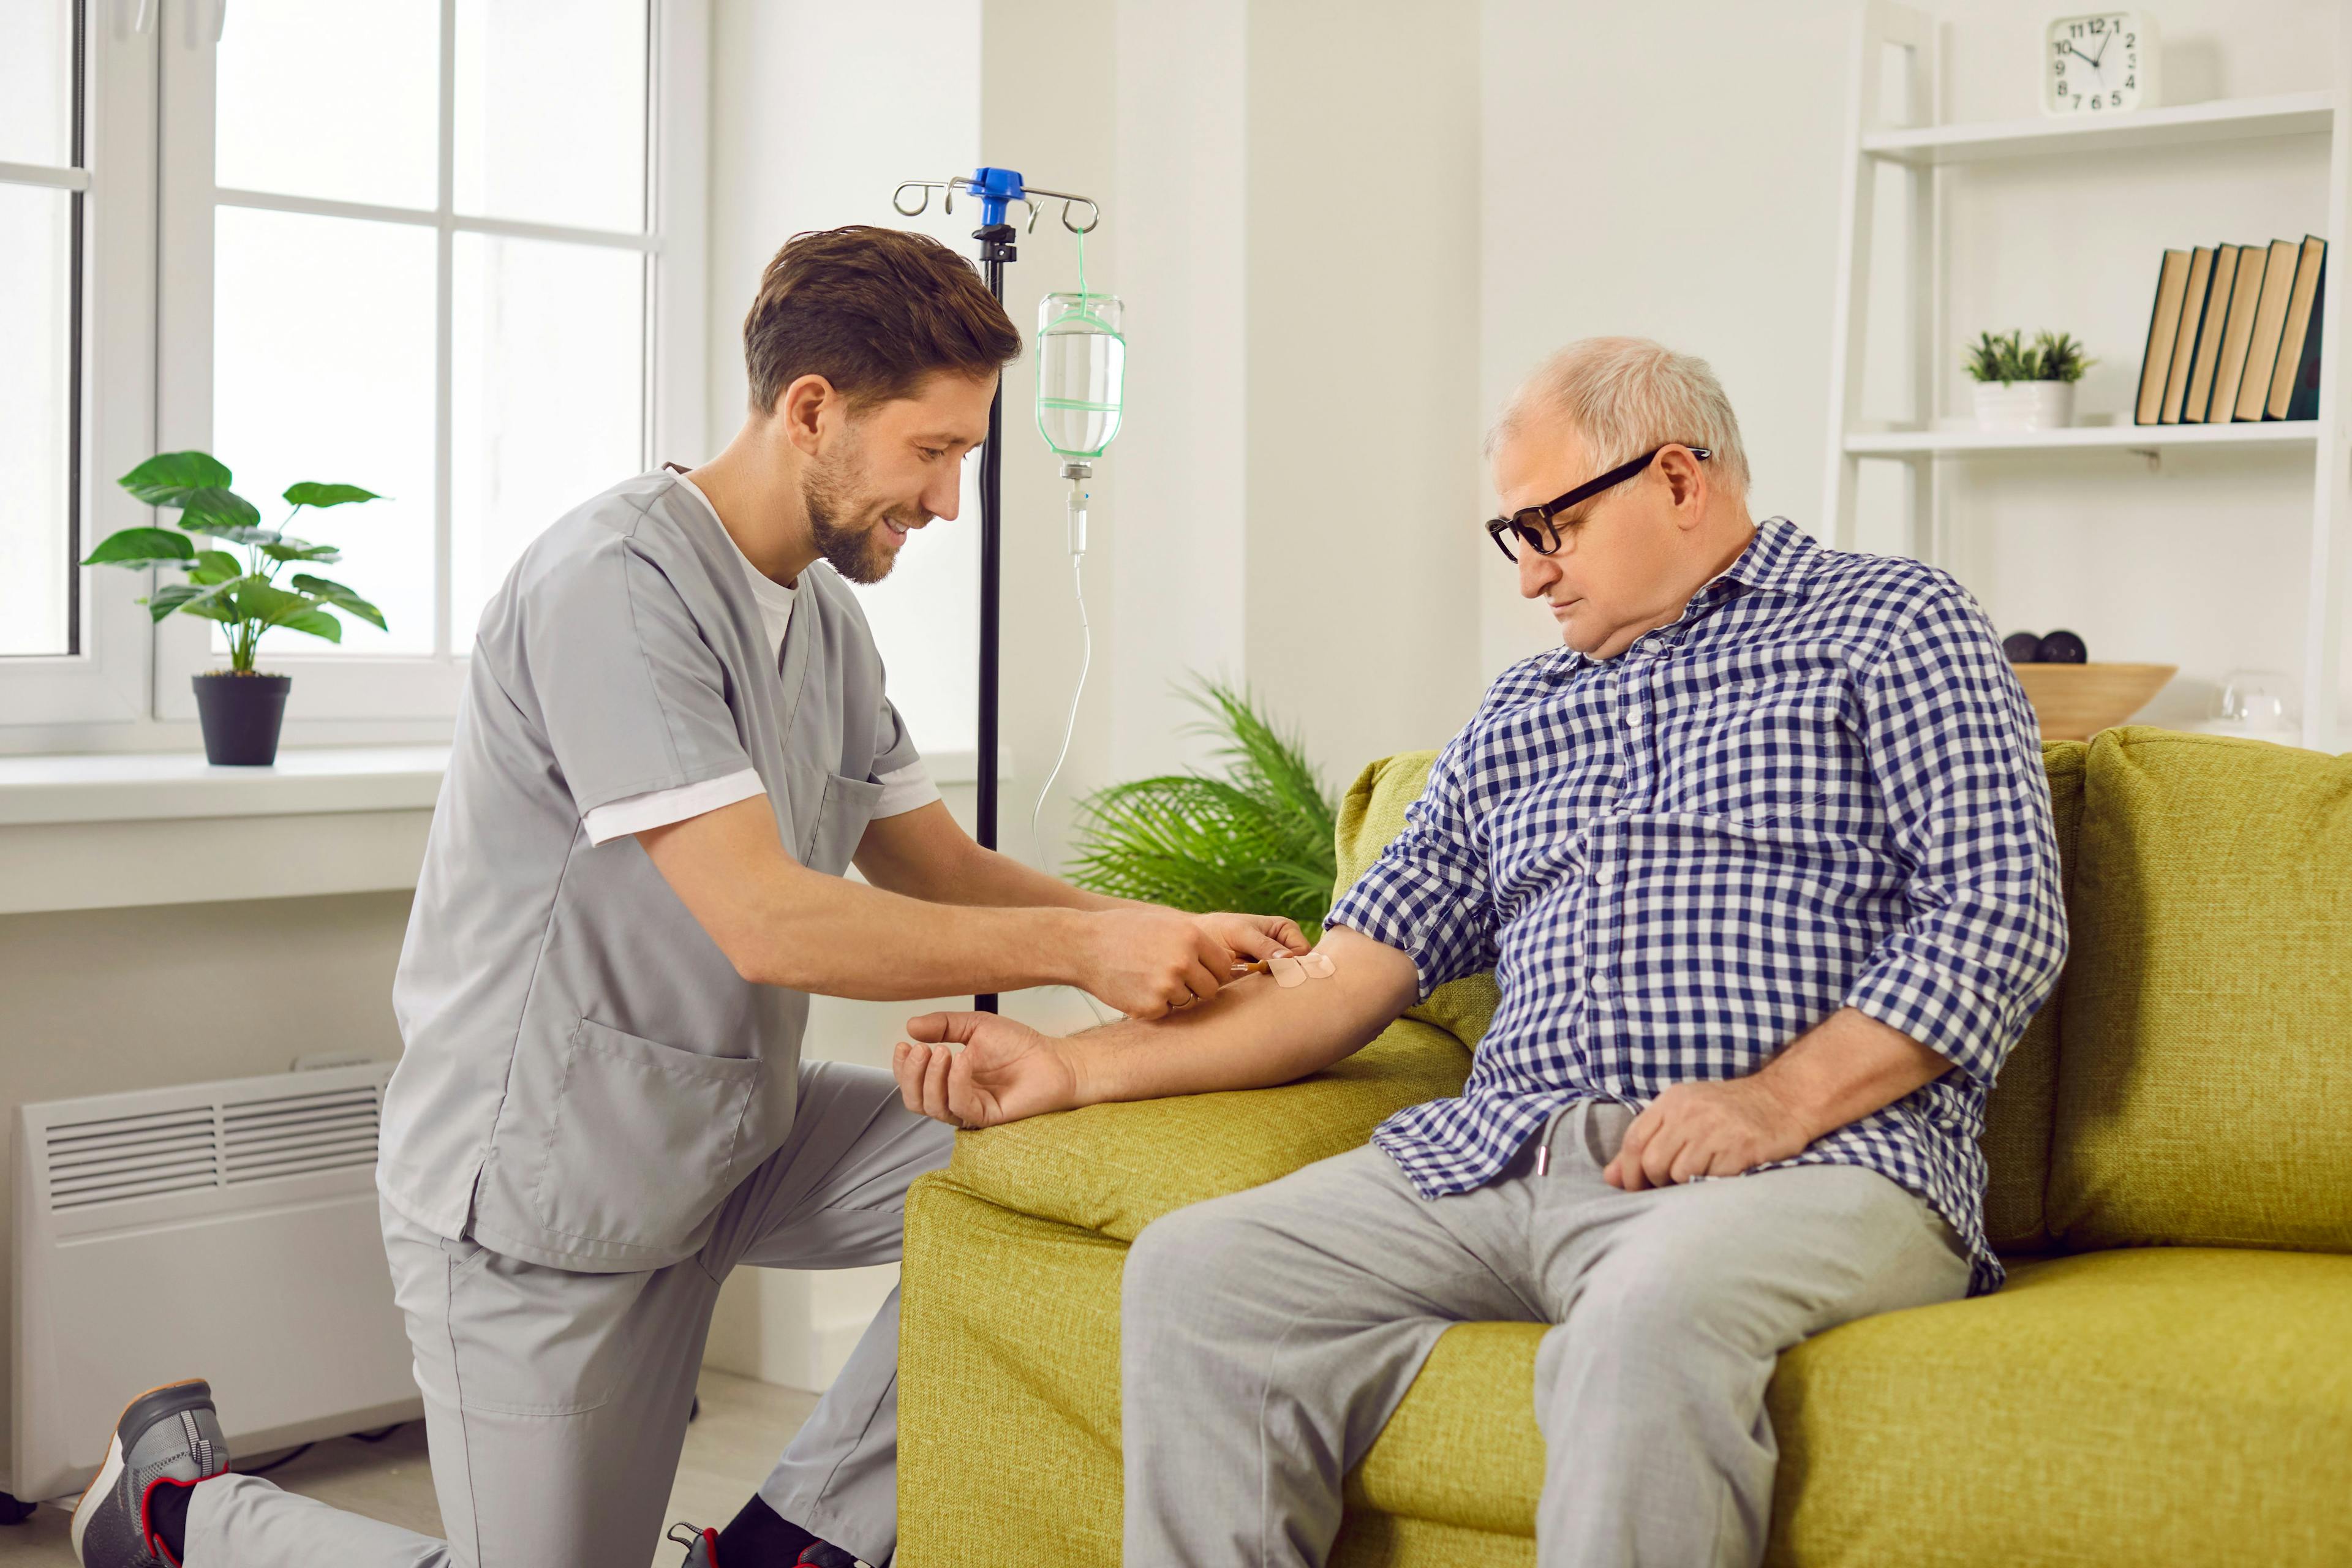 Nursing giving infusion to senior patient | Image credit: Studio Romantic - stock.adobe.com